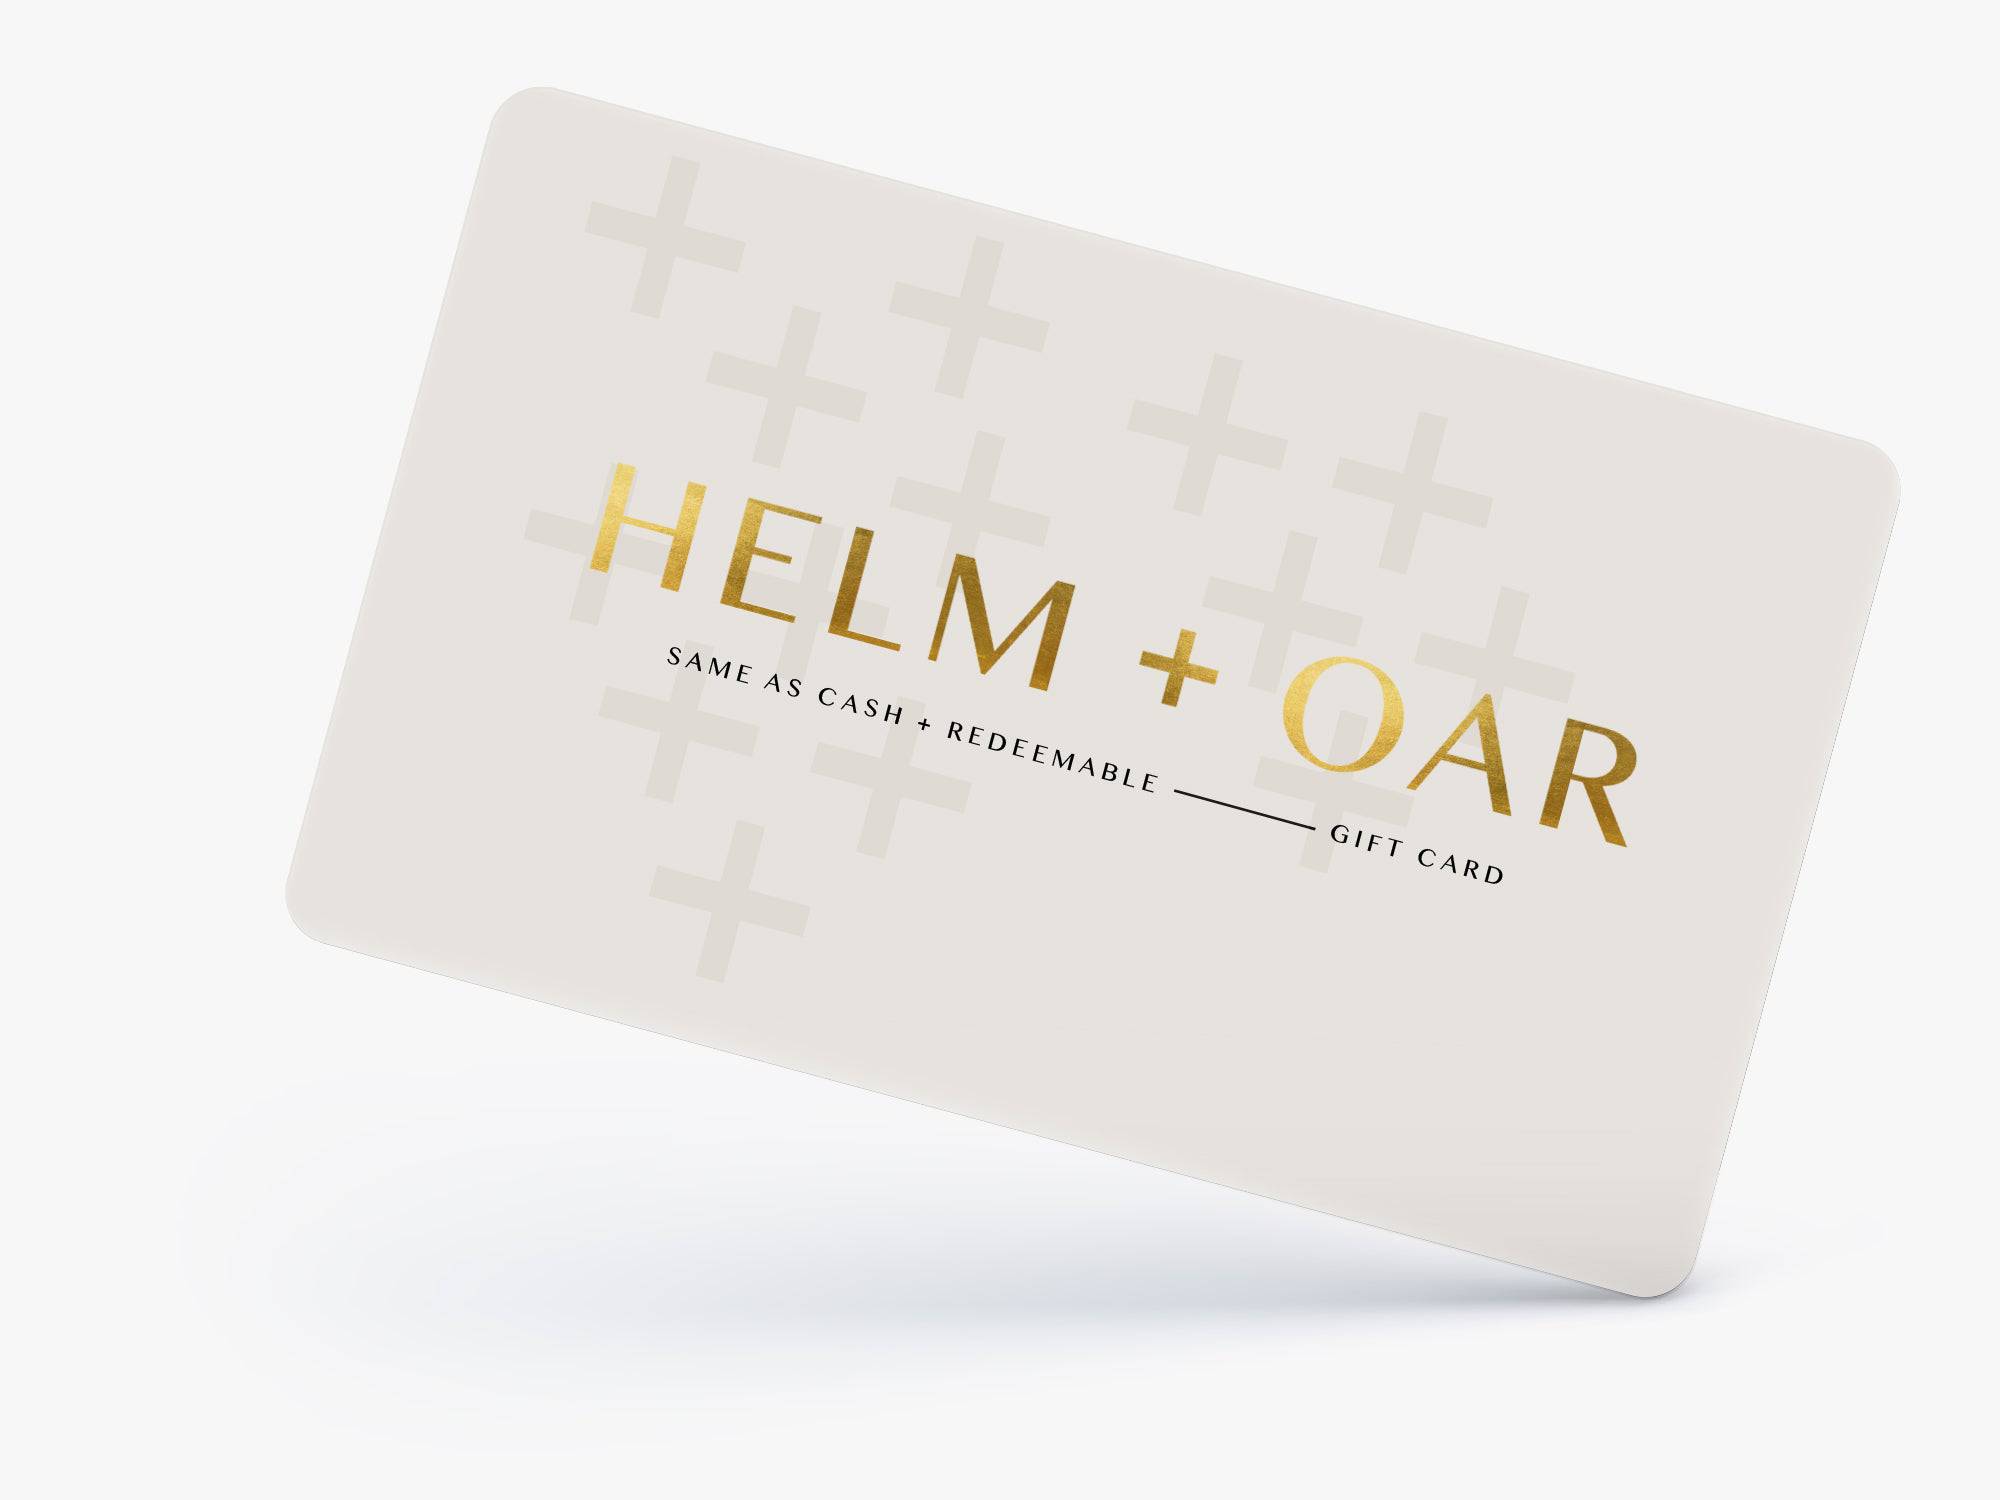 H+O Gift Card - H E L M + O A R